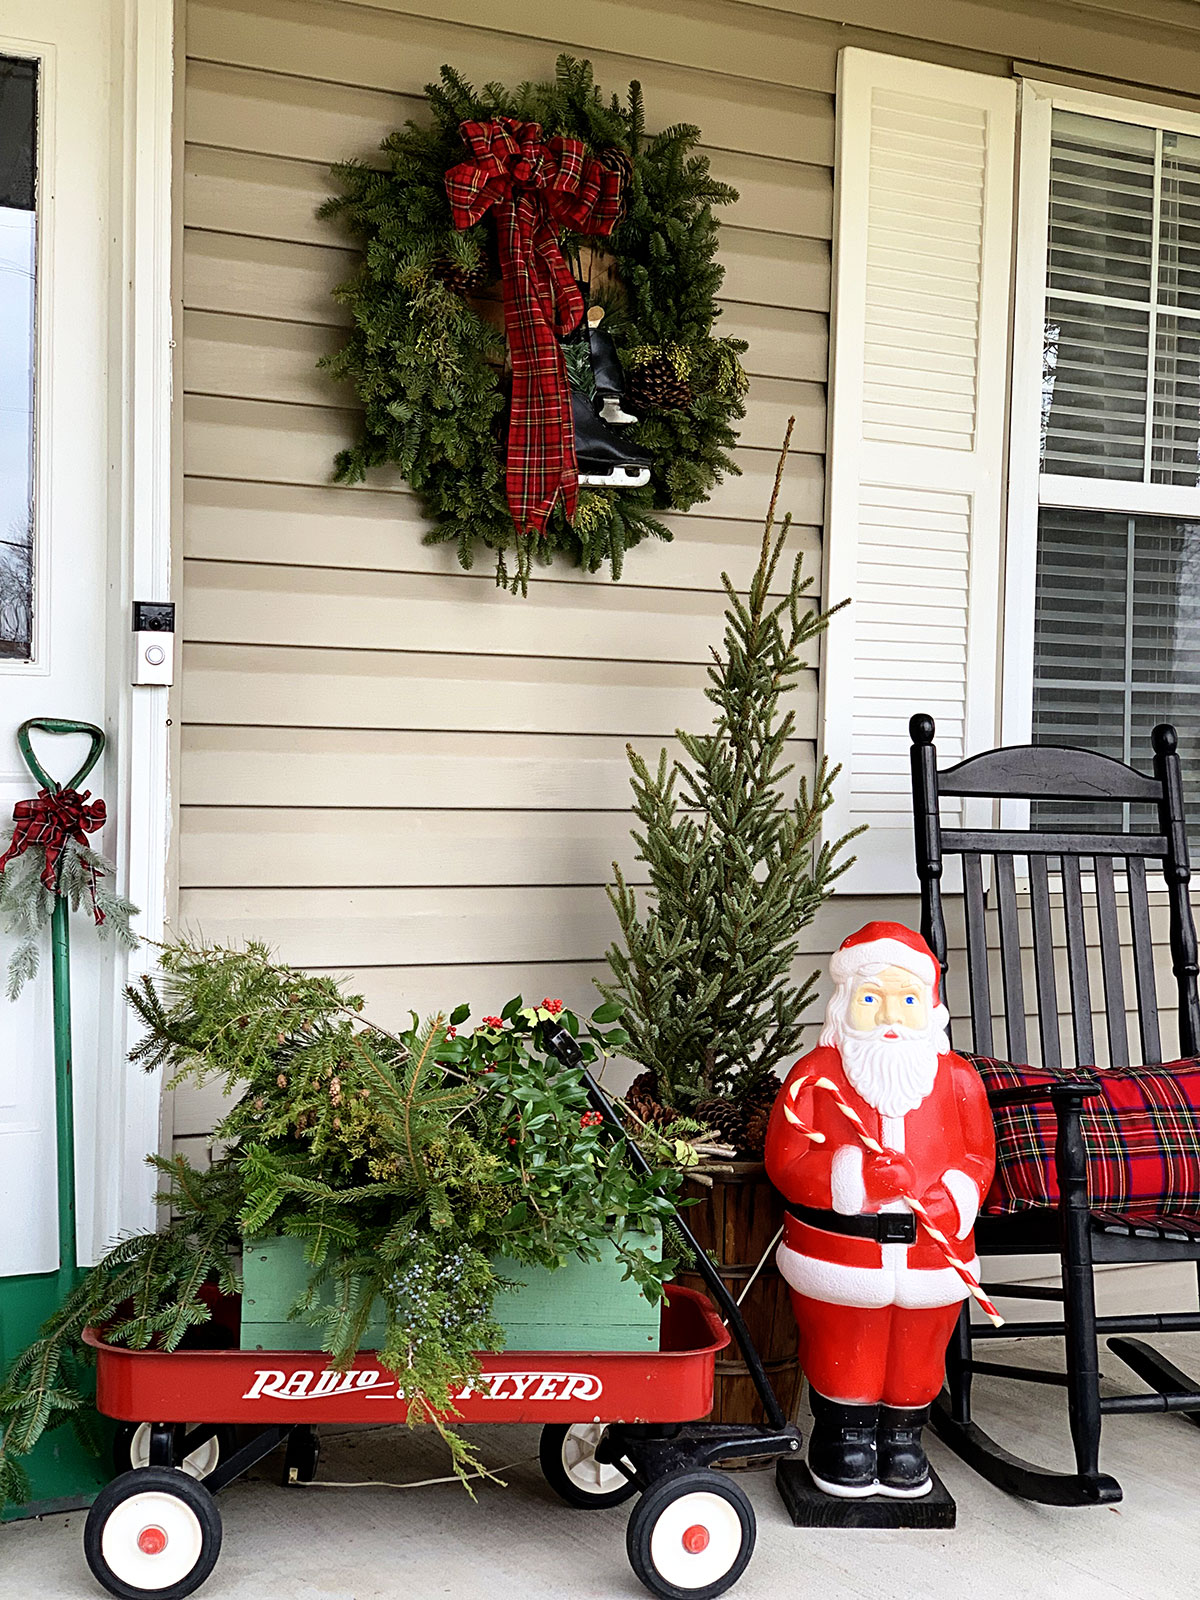 Nostalgic Christmas porch decorations using a Radio Flyer red wagon and retro Santa blow mold.